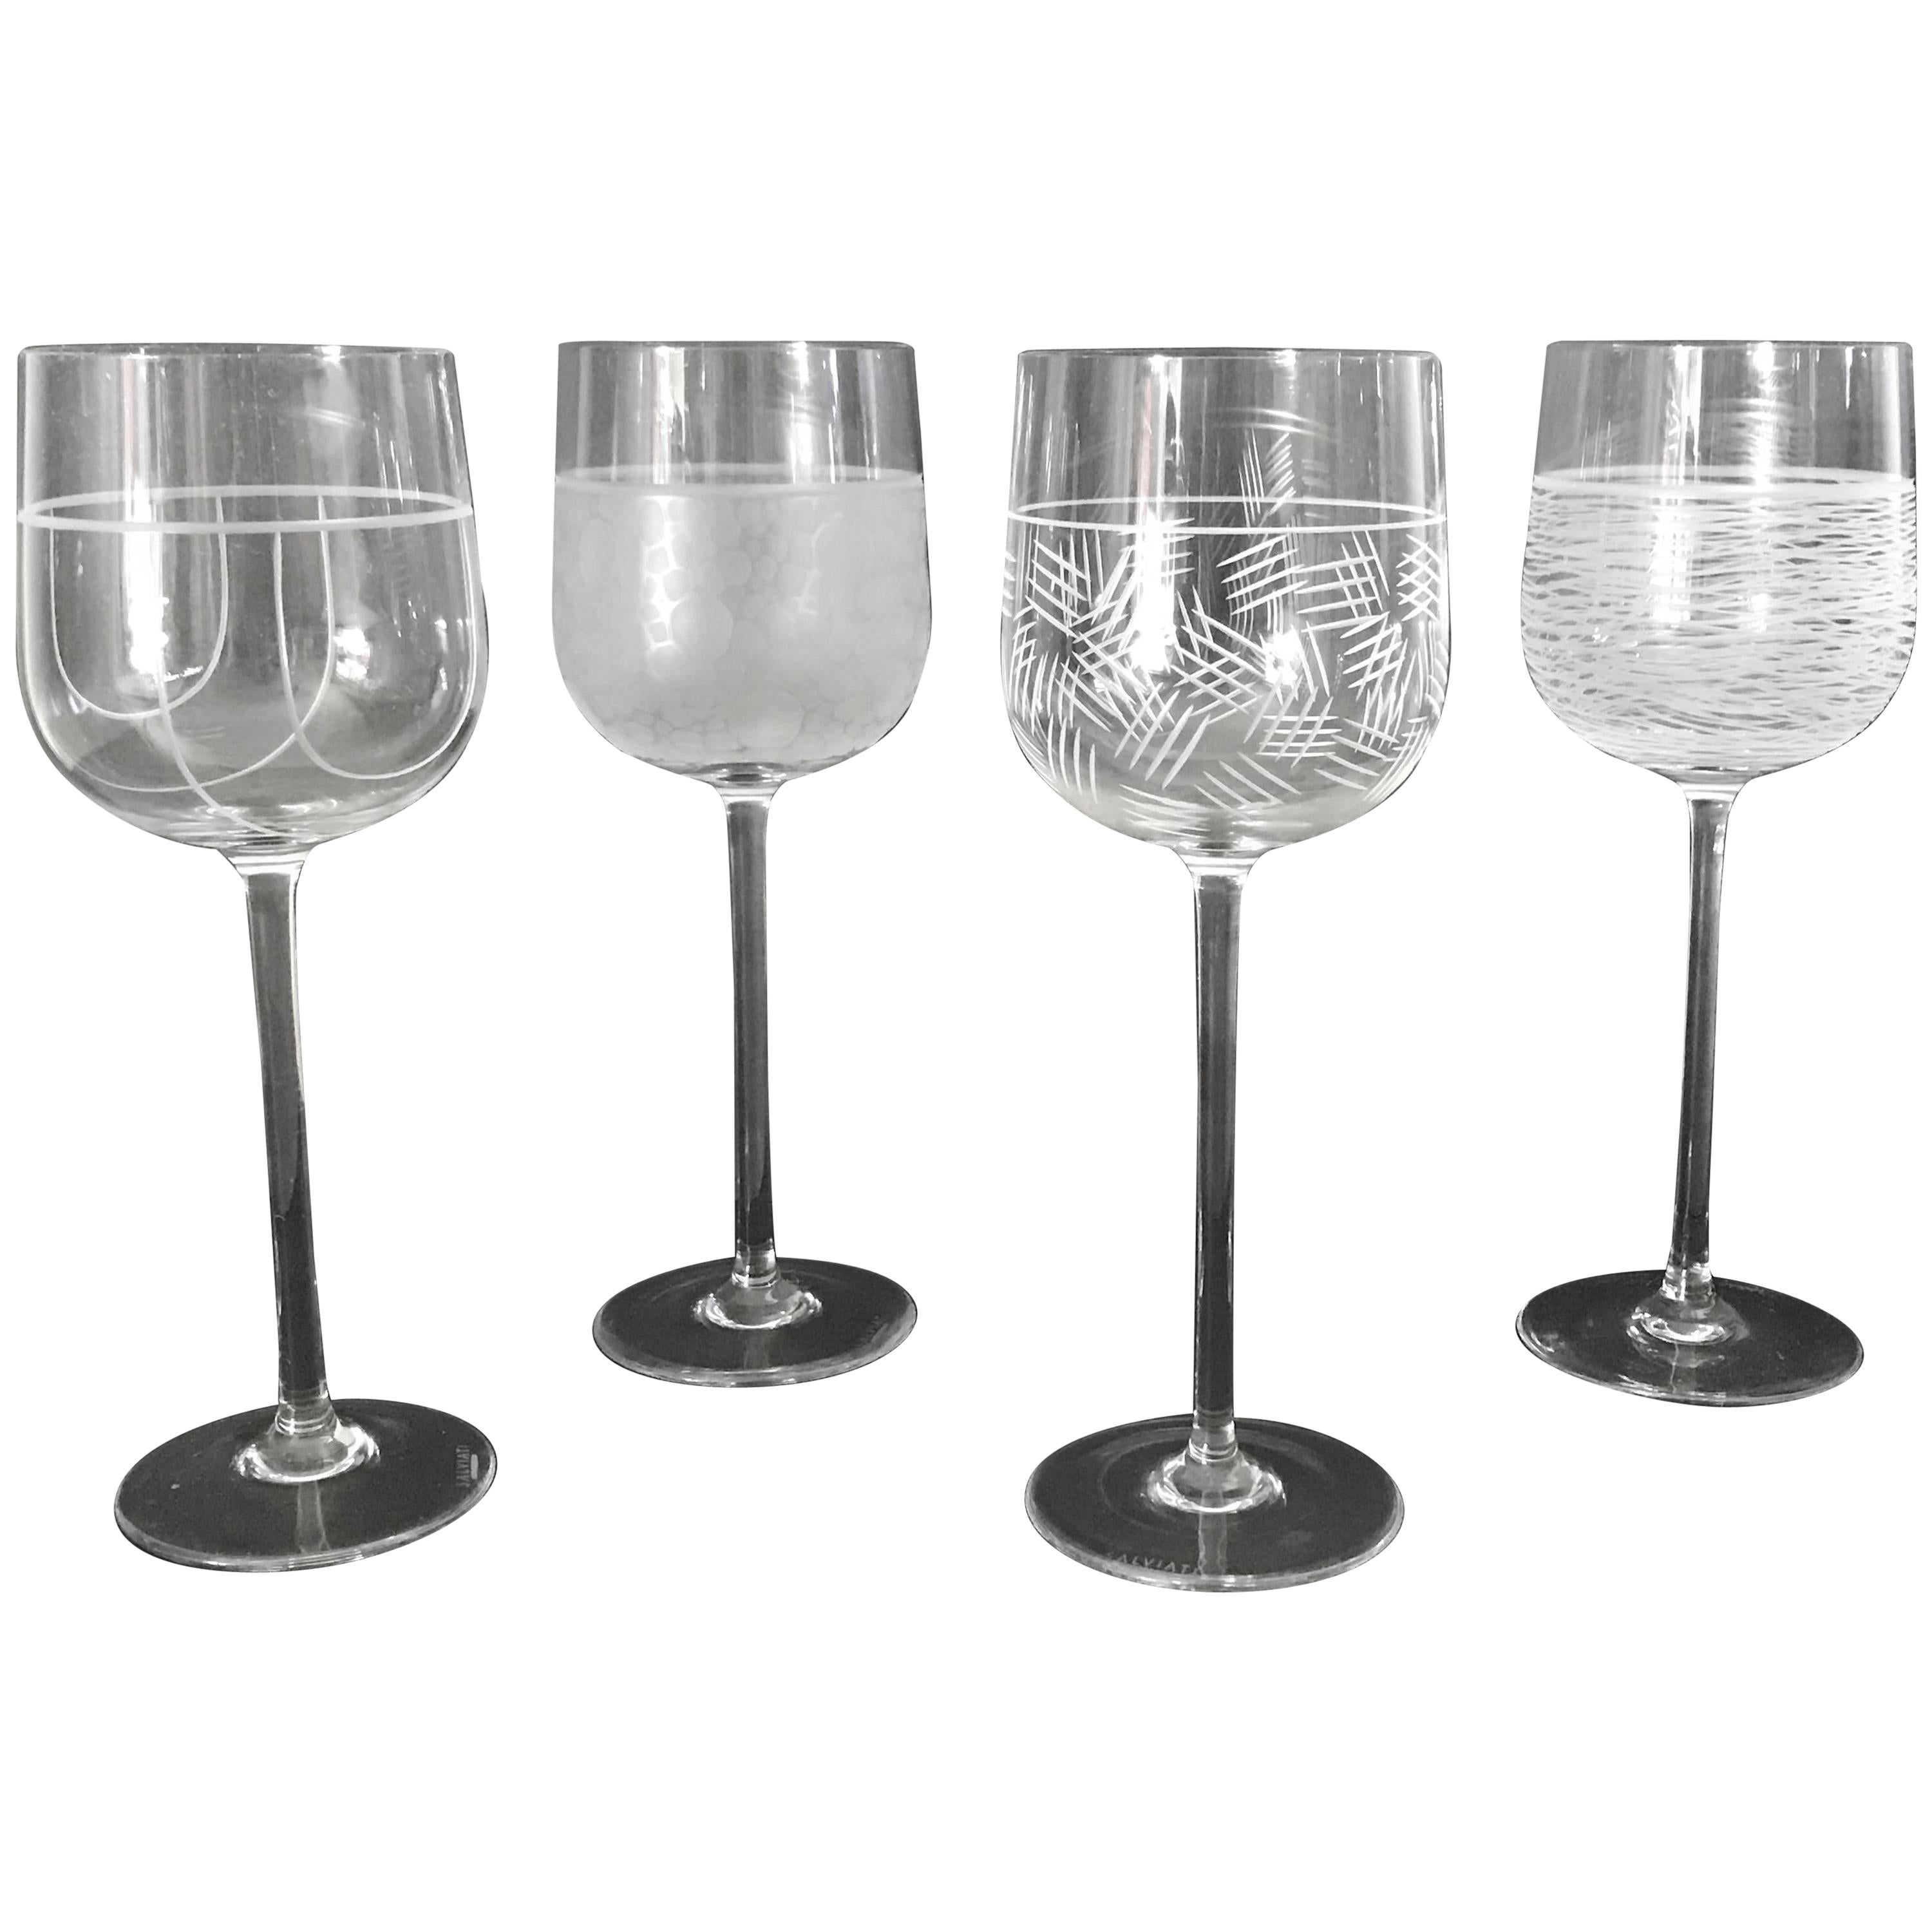 Set of 4 Italian Murano Wine Glasses by Salviati FINAL CLEARANCE SALE